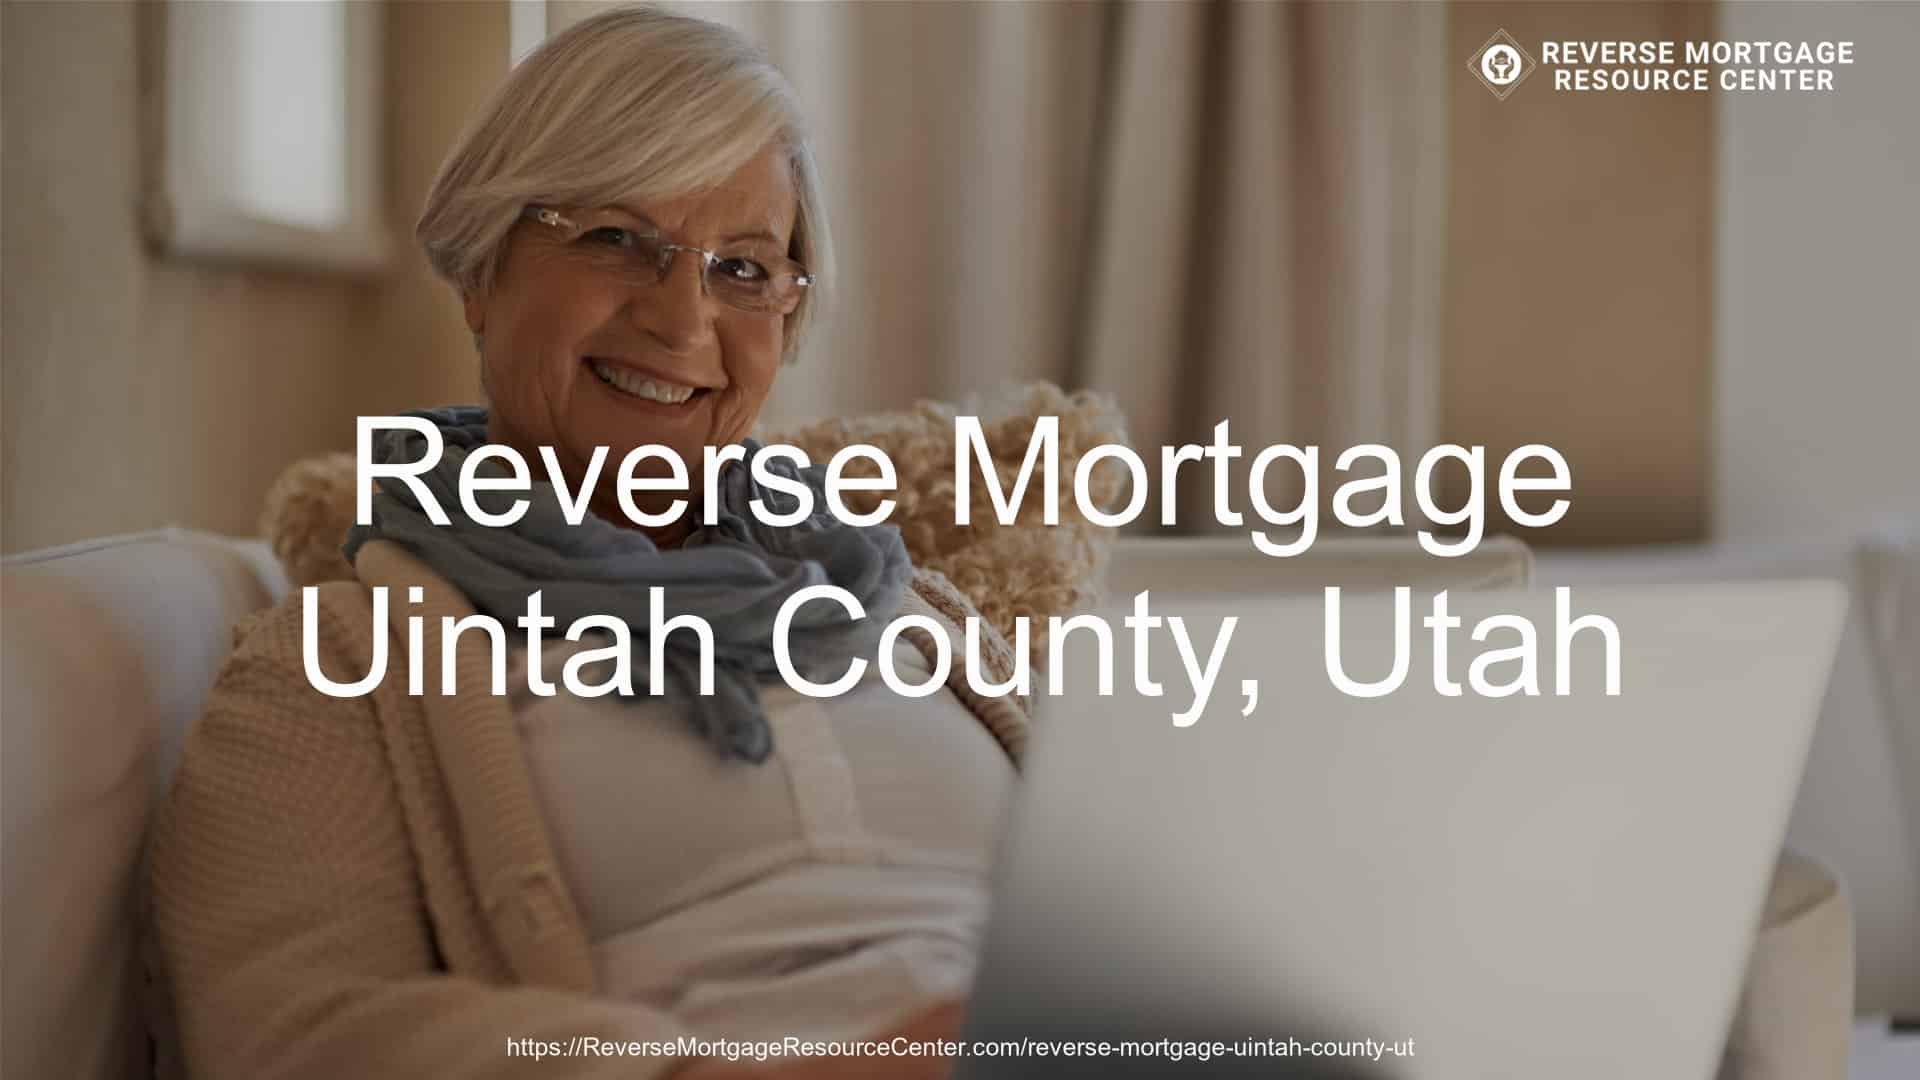 Reverse Mortgage Loans in Uintah County Utah